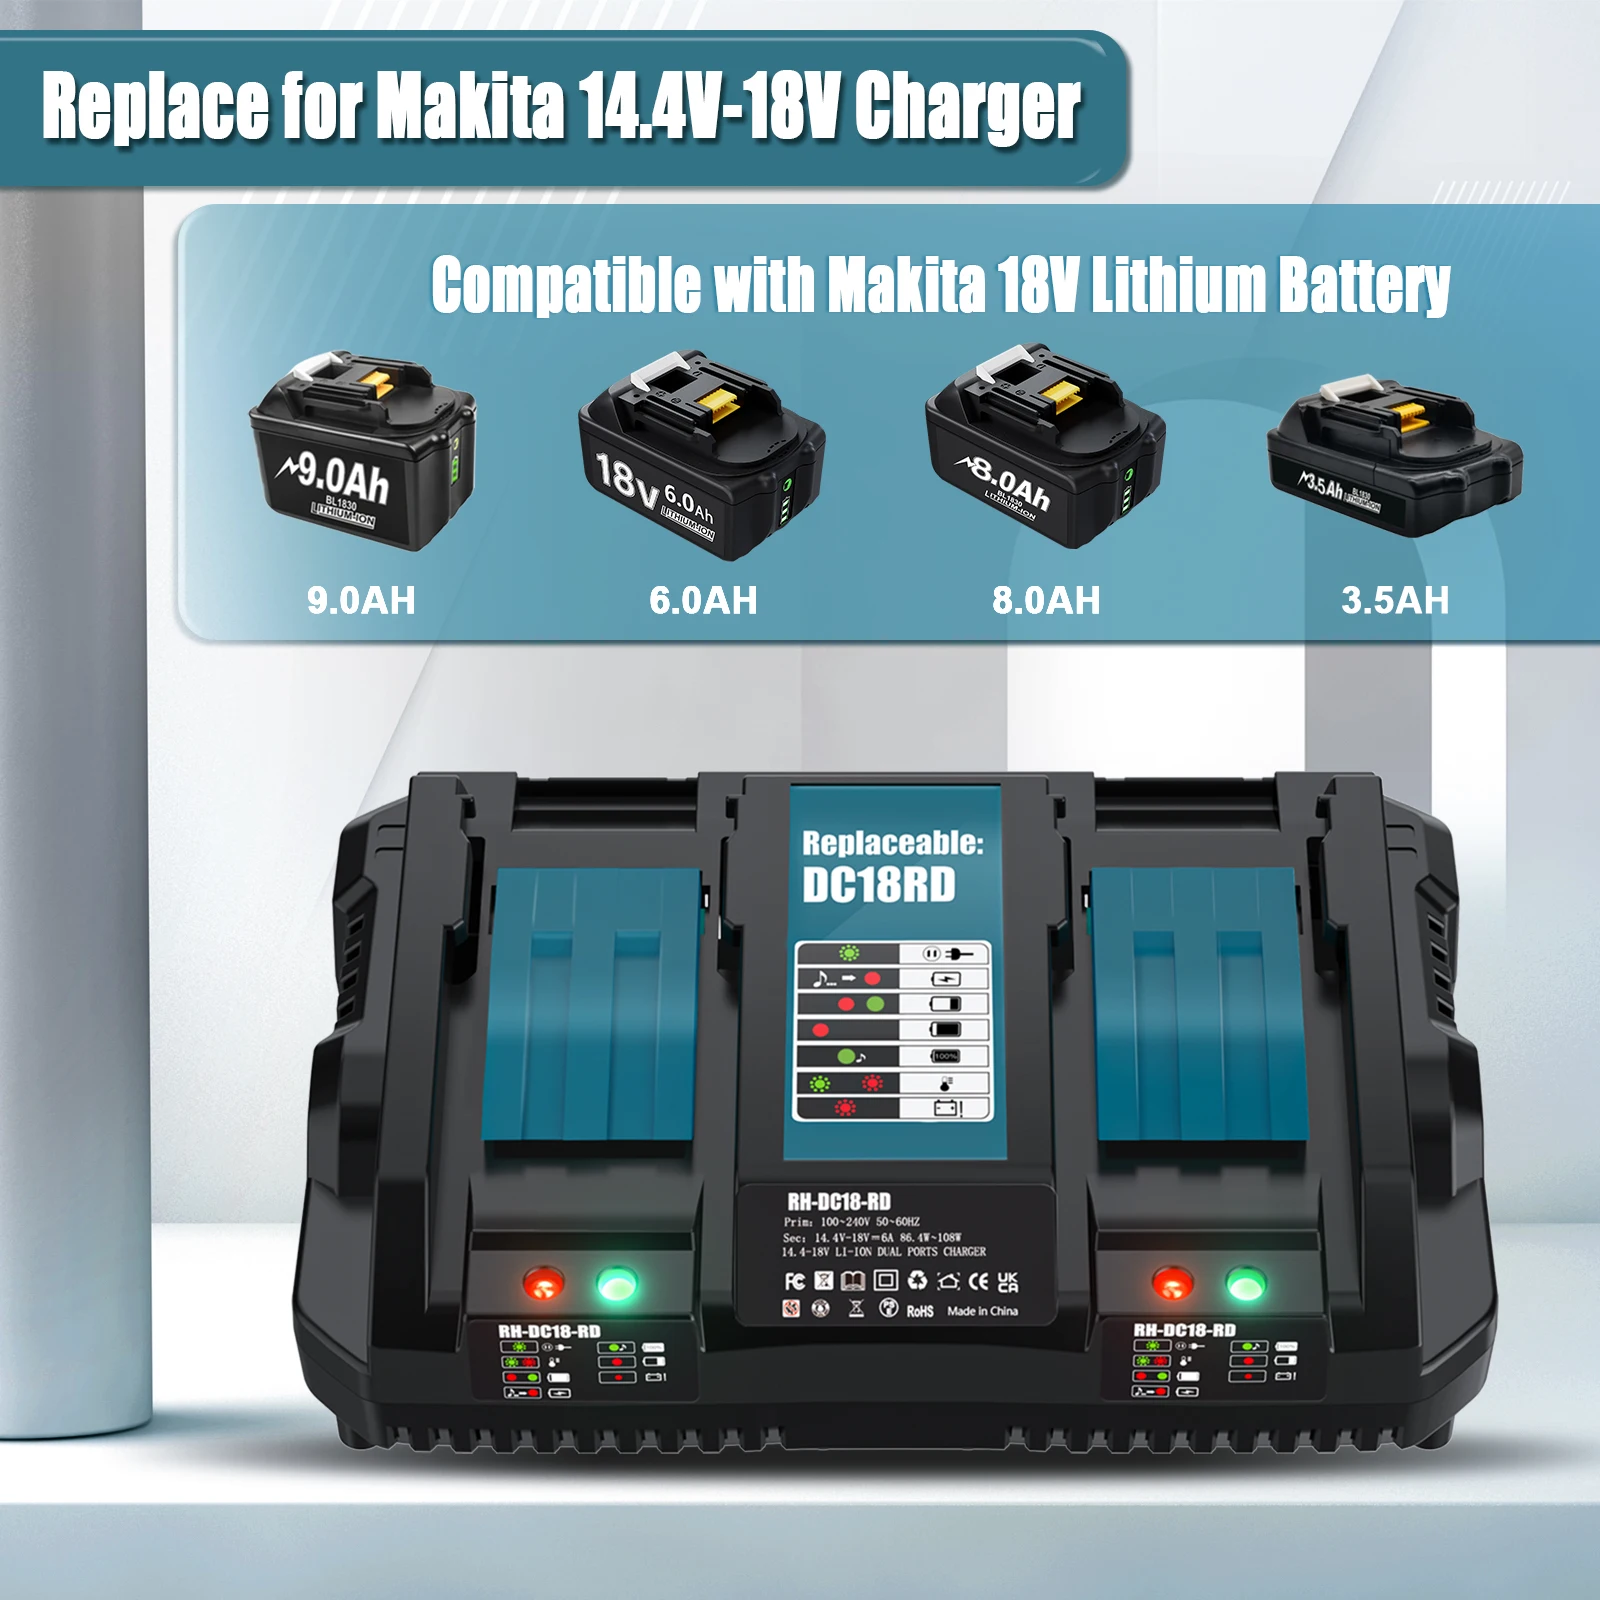 

3A 6A 9A For Makita Battery Charger 14.4V 18V BL1860 BL1415 BL1430 BL1830 BL1840 BL1850 BL1845 DC18RA DC18RC DC18RD BL1880 BL189